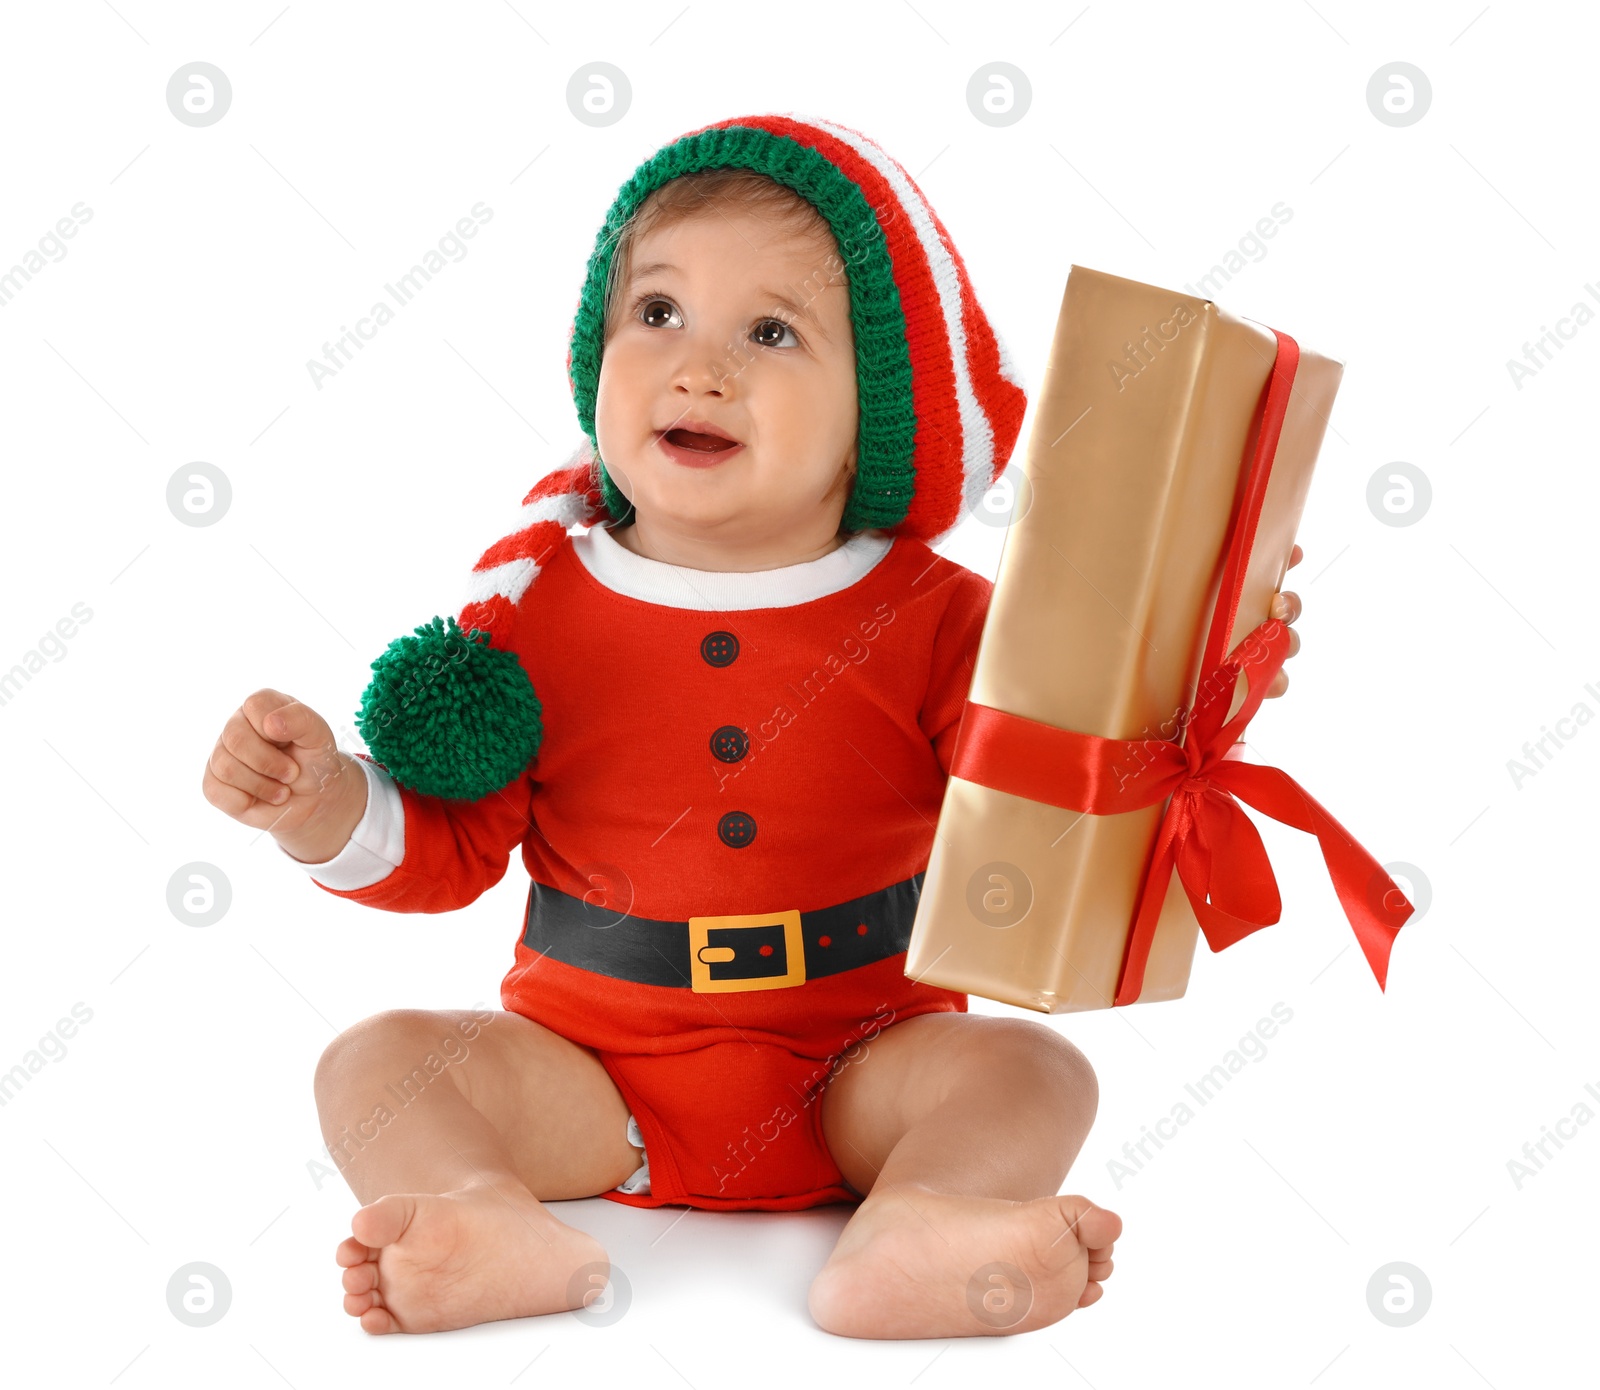 Photo of Festively dressed baby with gift box on white background. Christmas celebration